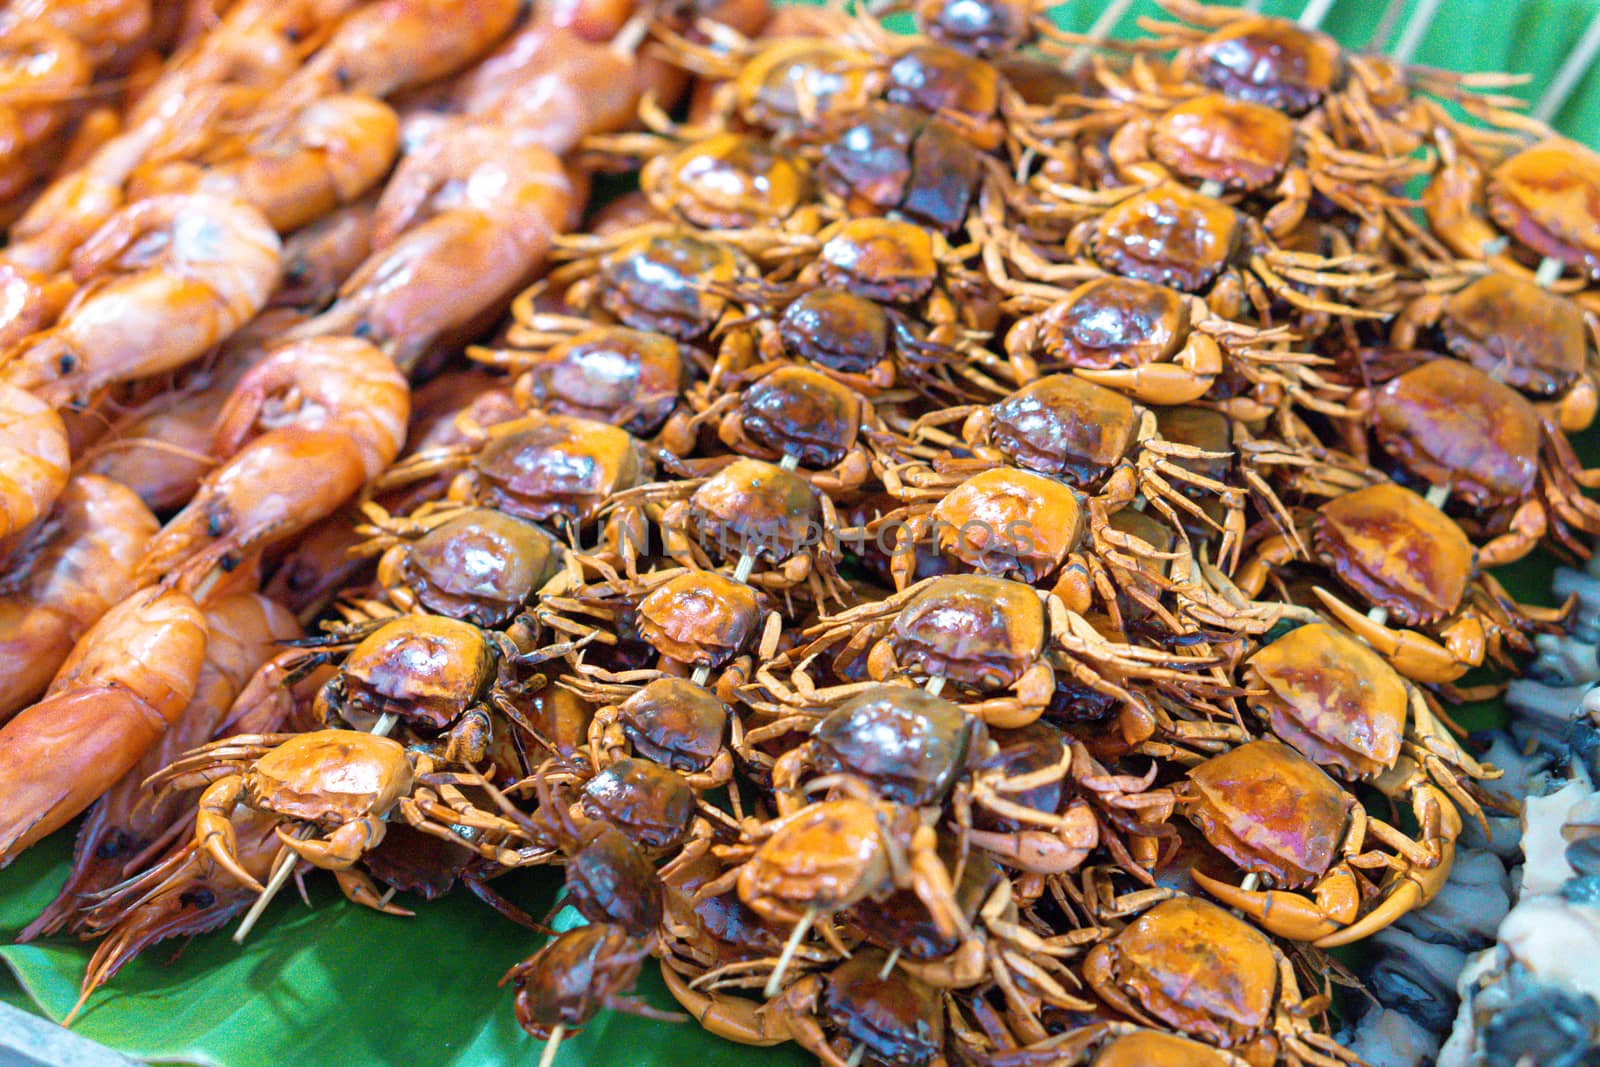 Grilled crab and shrimp food at walking street by pt.pongsak@gmail.com